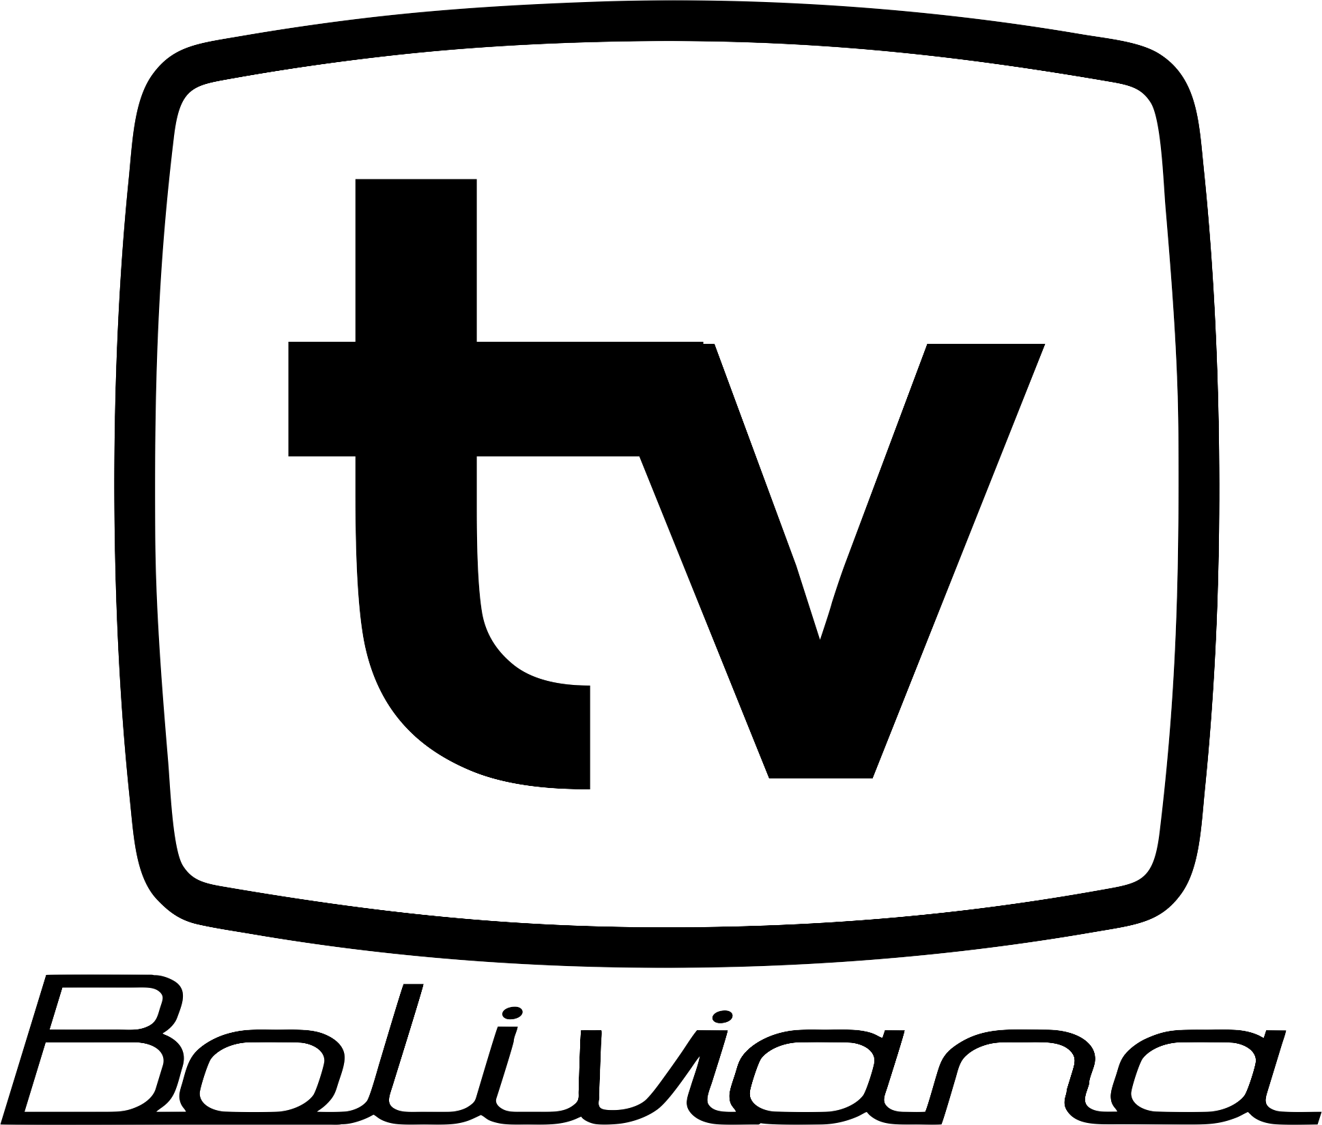 Bolivia Logo - Bolivia TV | Logopedia | FANDOM powered by Wikia